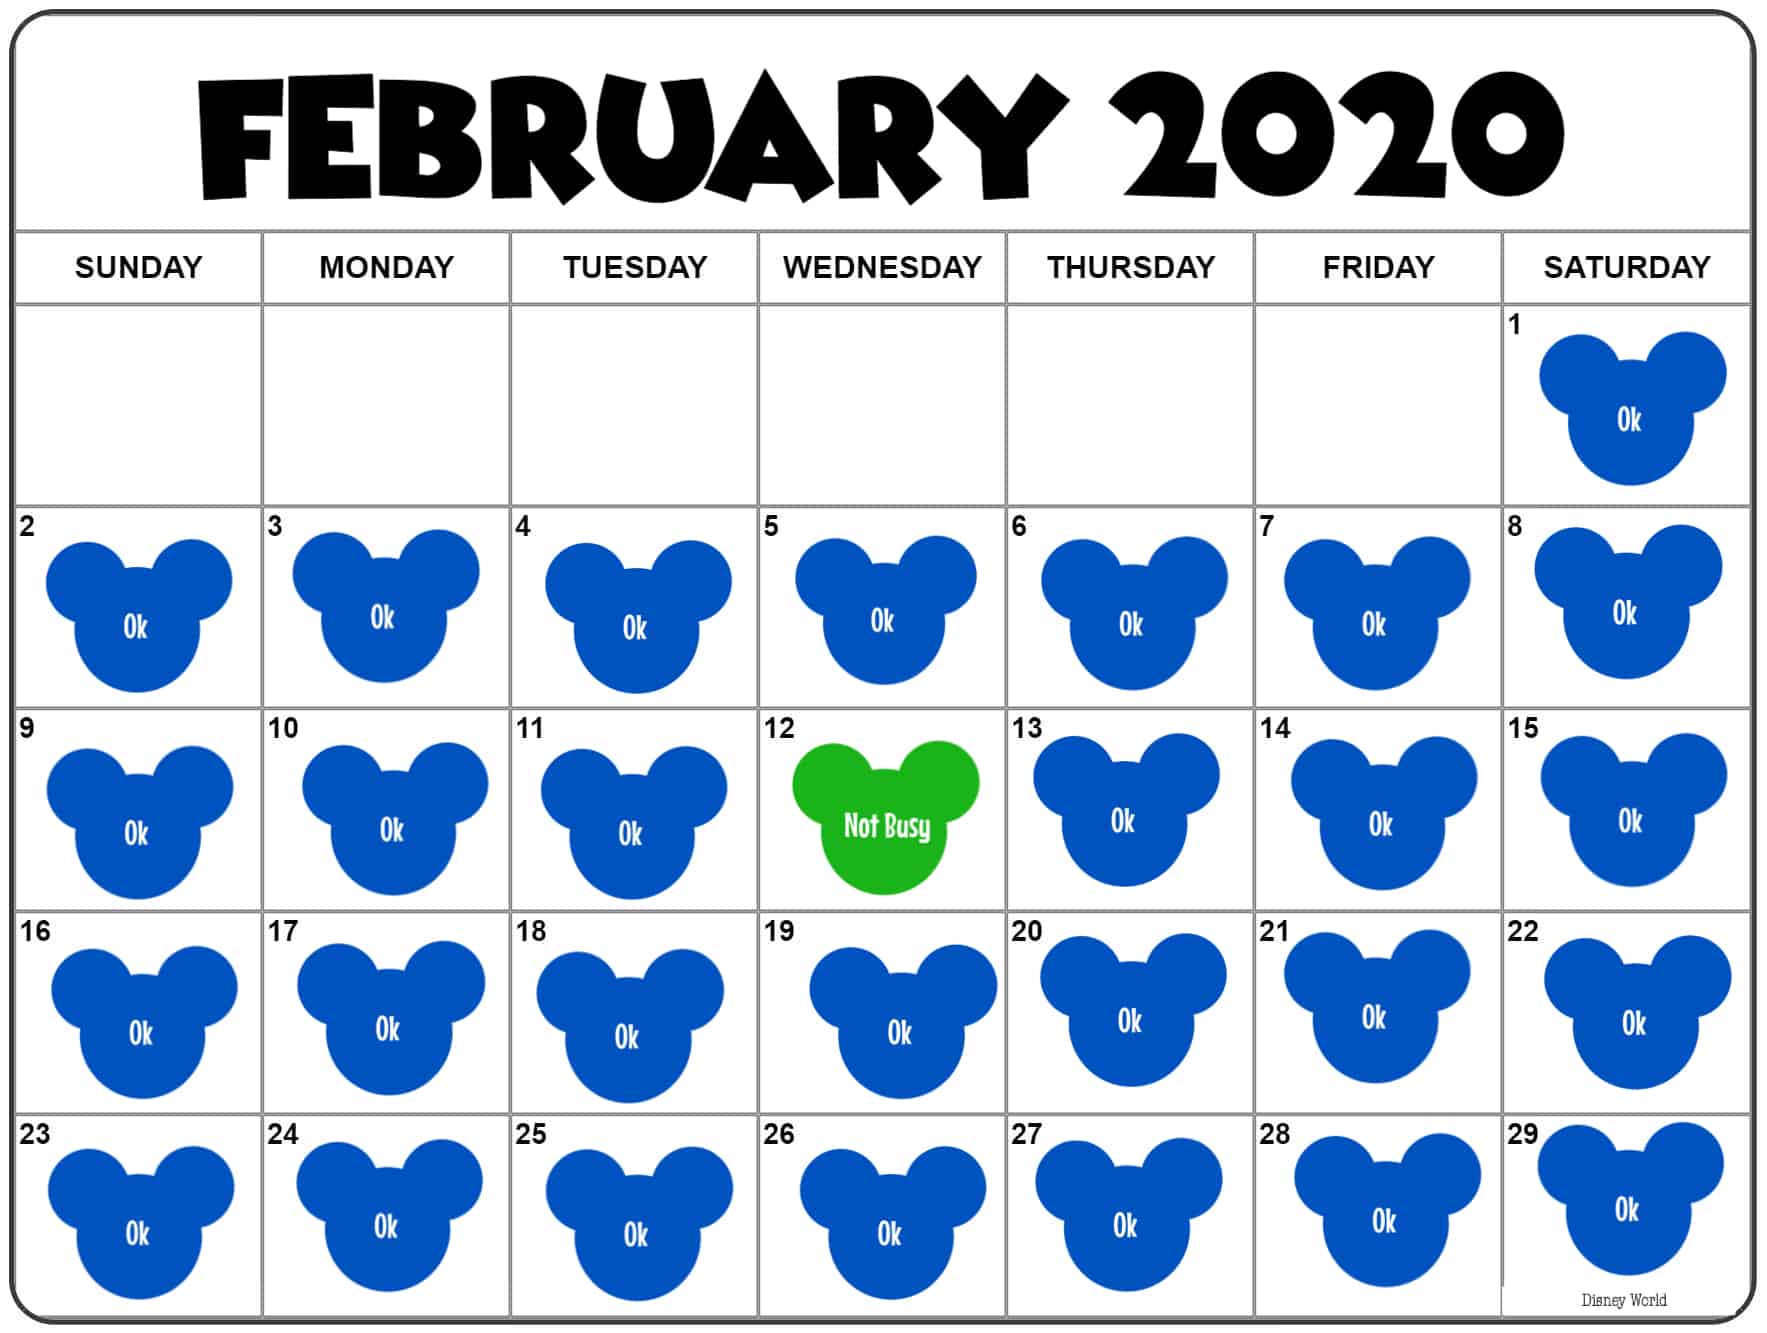 February 2020 Disney World Crowd Calendar February 2020